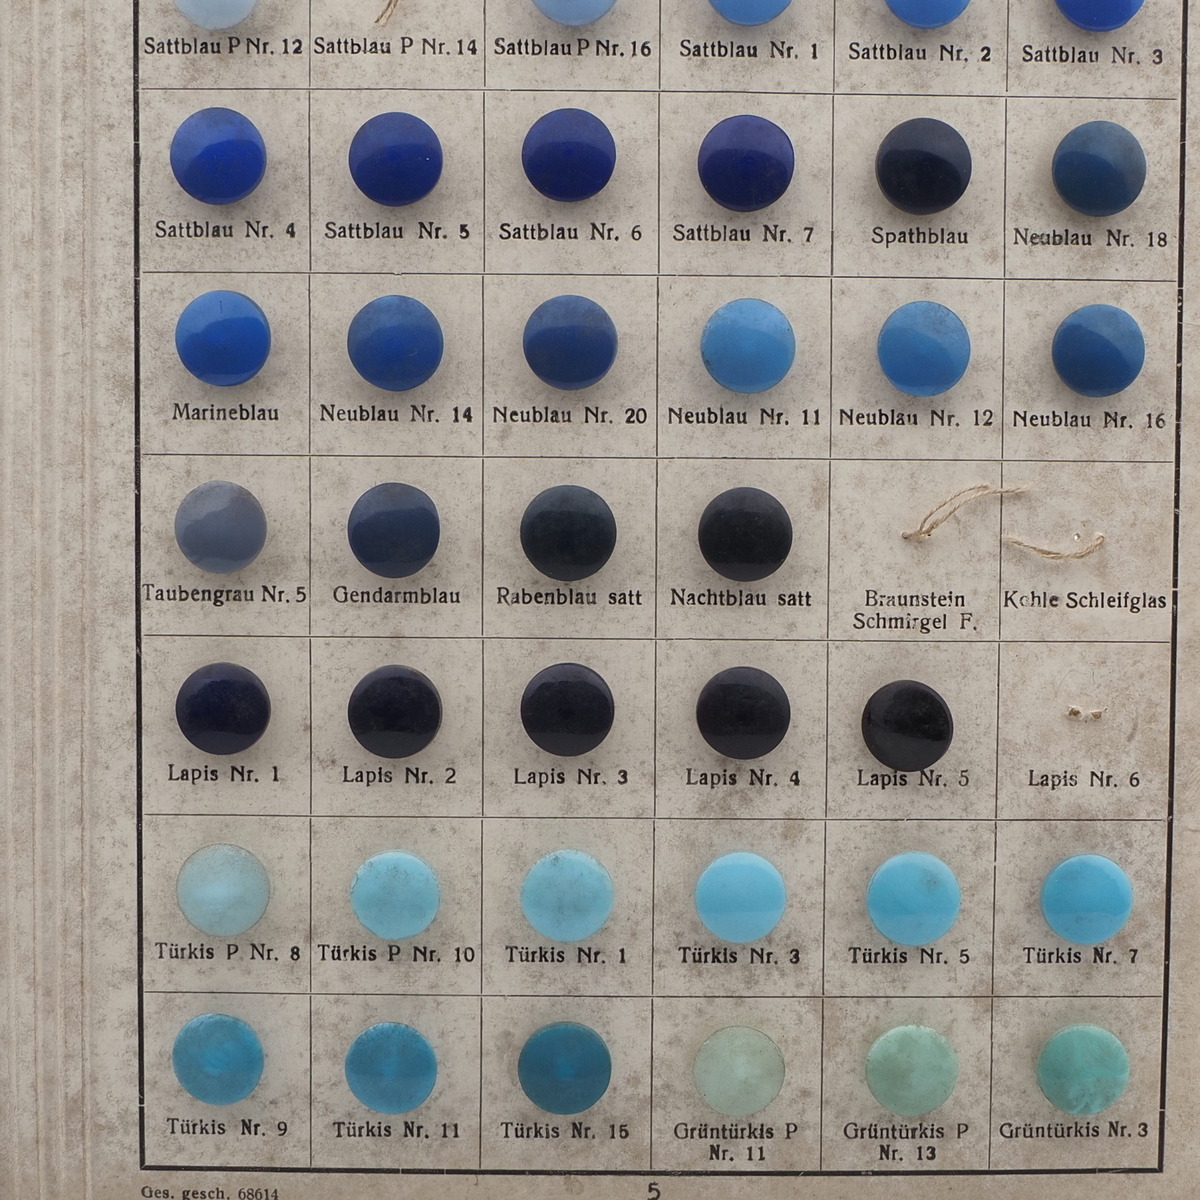 Sample card (50) vintage Czech glass buttons blues Joseph Riedel Polaun 1935